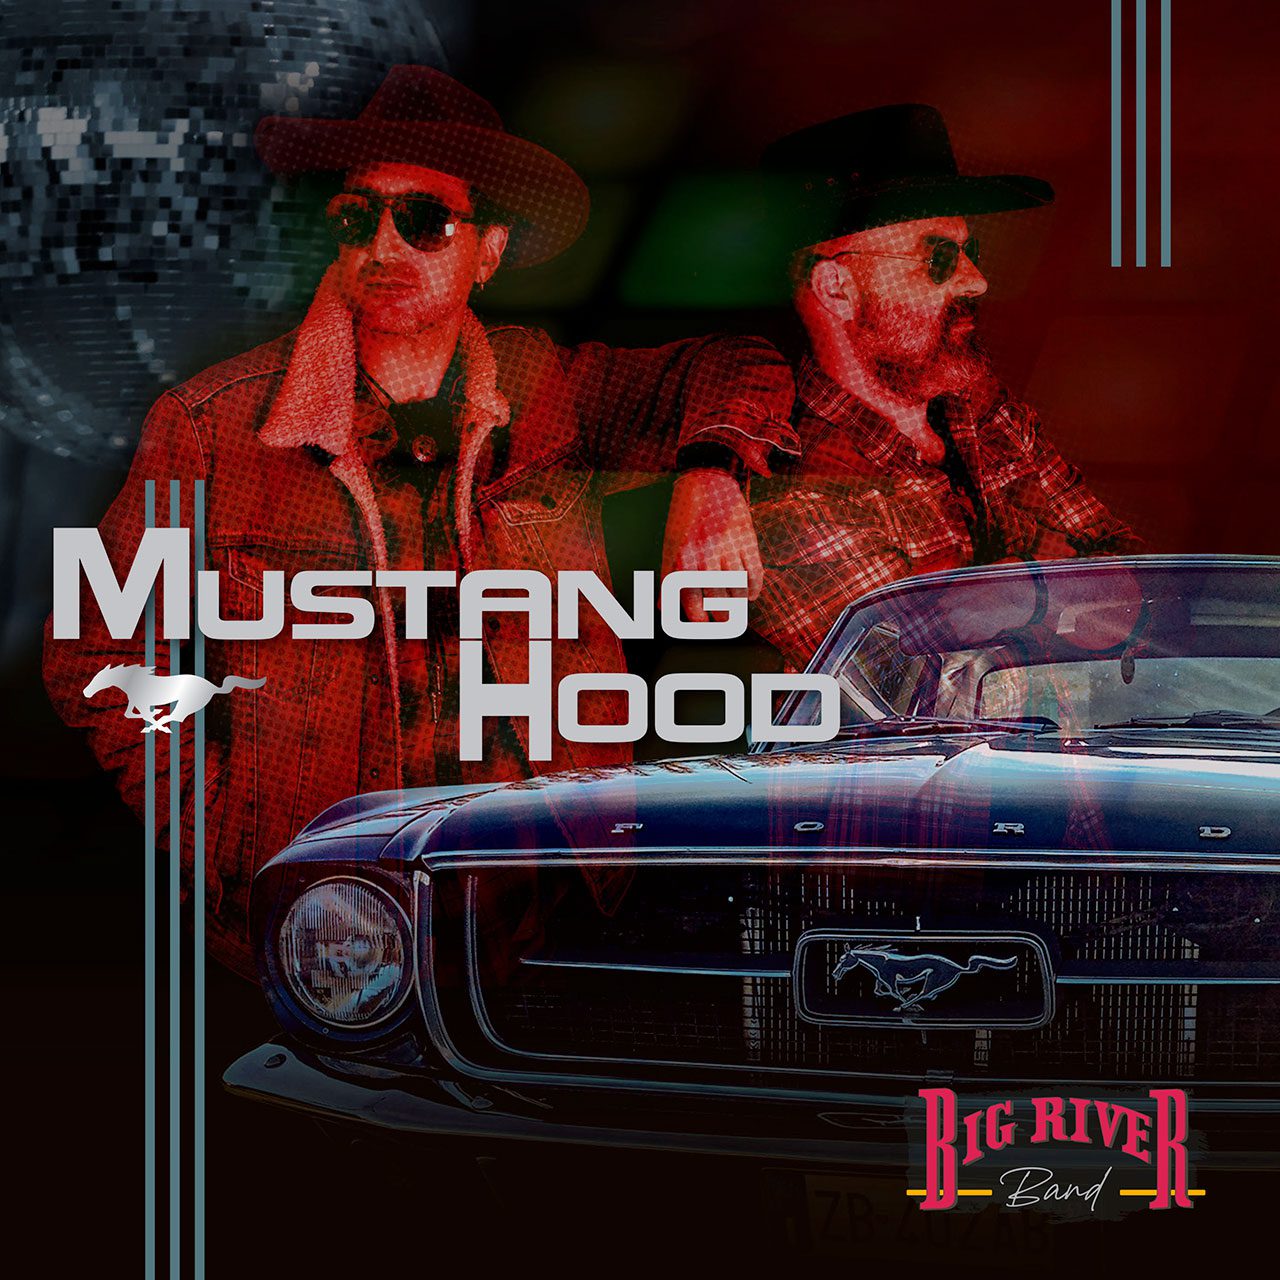 I Big River fuori con l'album Mustang Hood